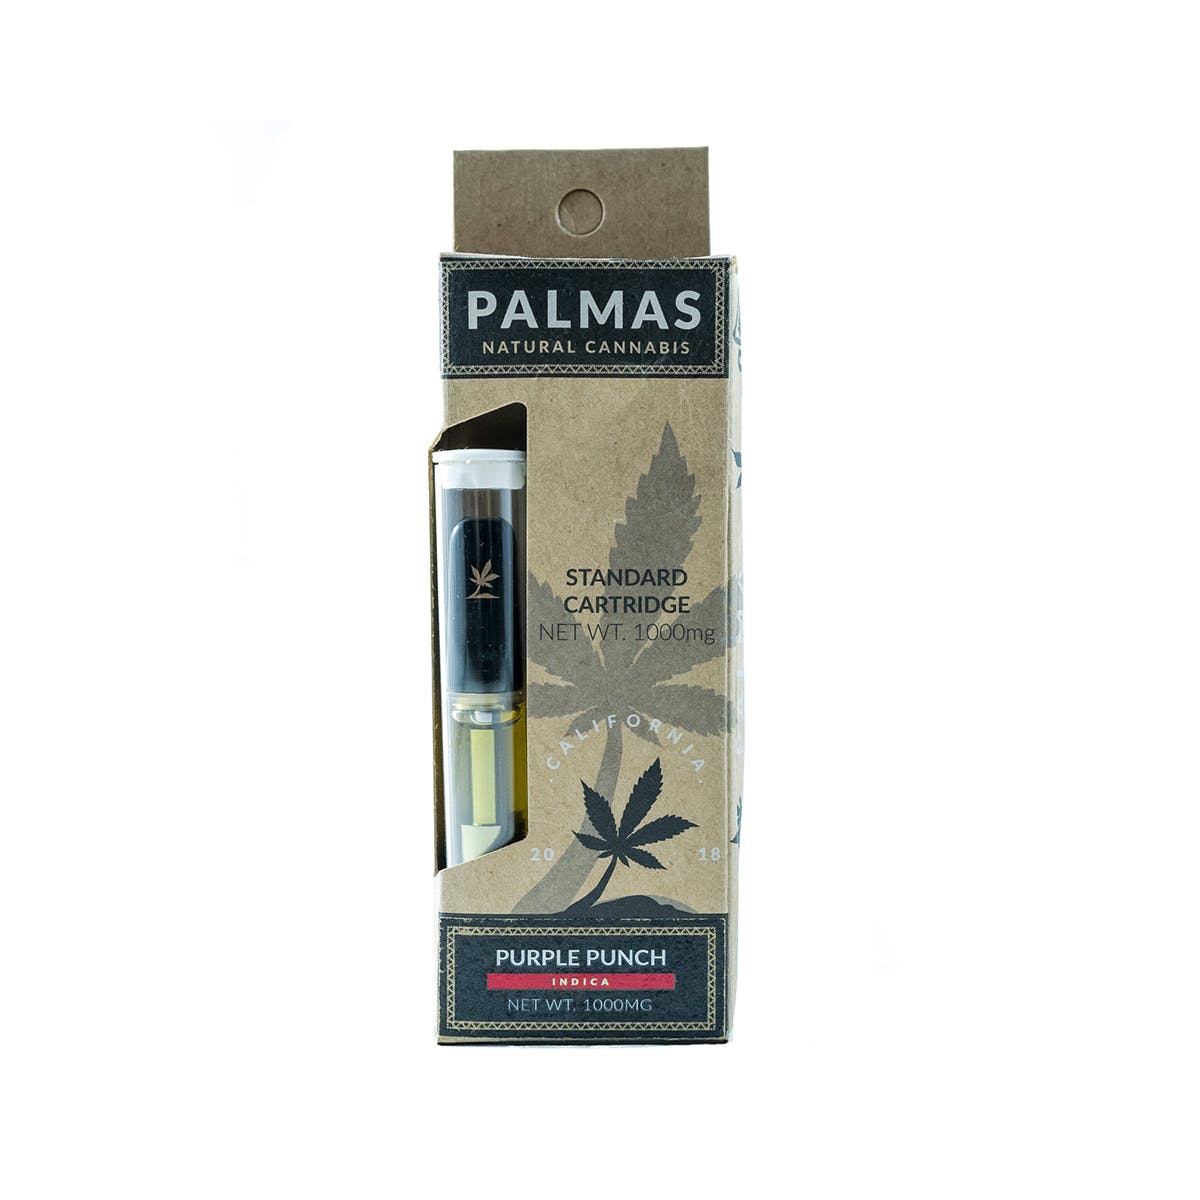 marijuana-dispensaries-gold-20-cap-collective-in-los-angeles-palmas-standard-cartridge-purple-punch